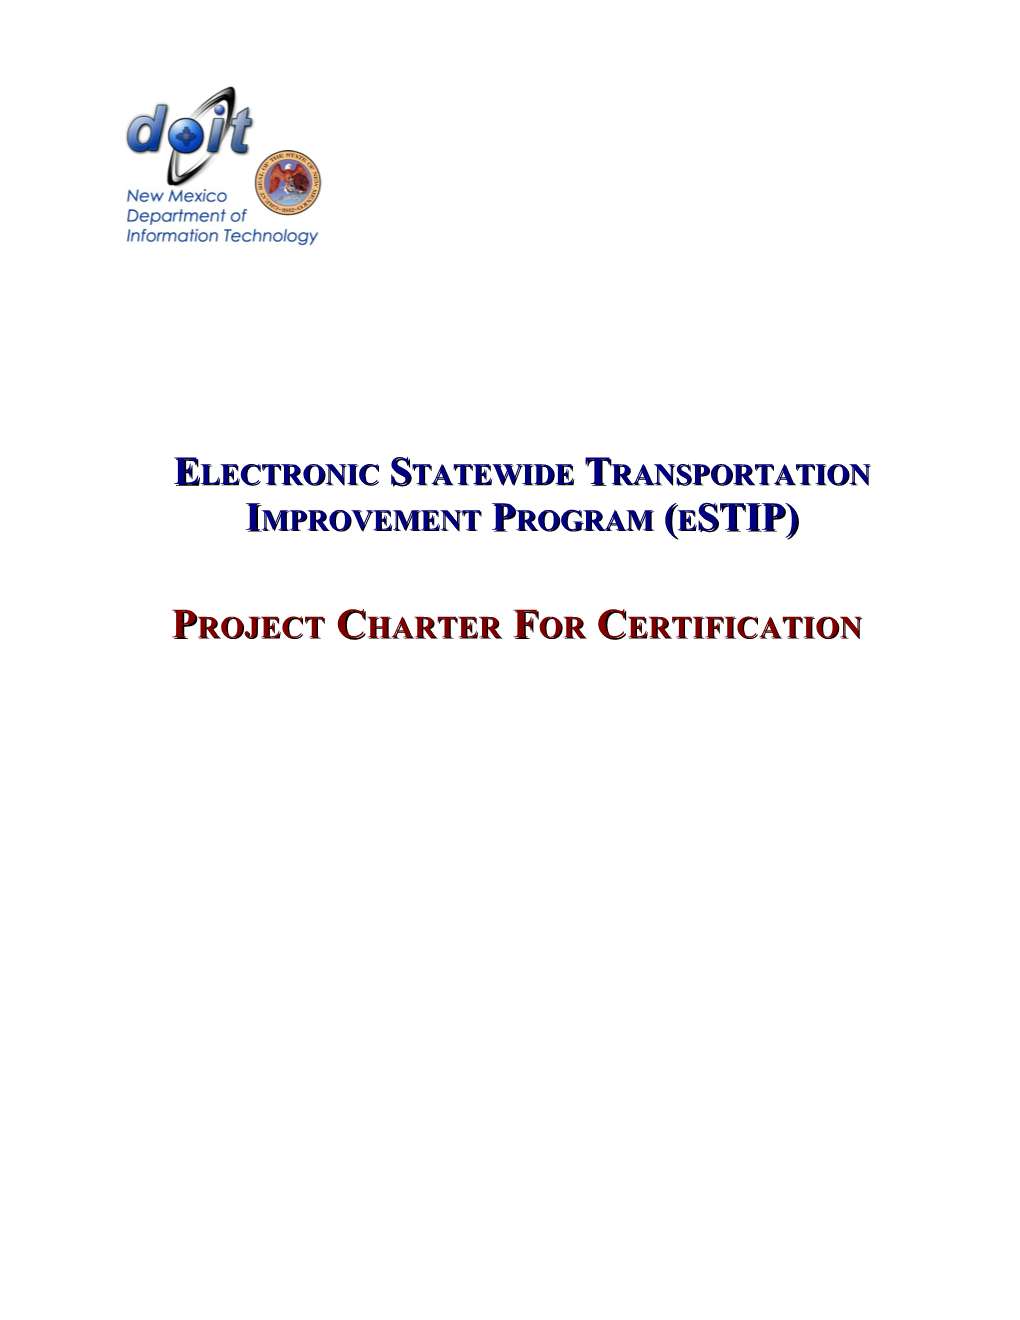 Electronic Statewide Transportation Improvement Program (Estip)